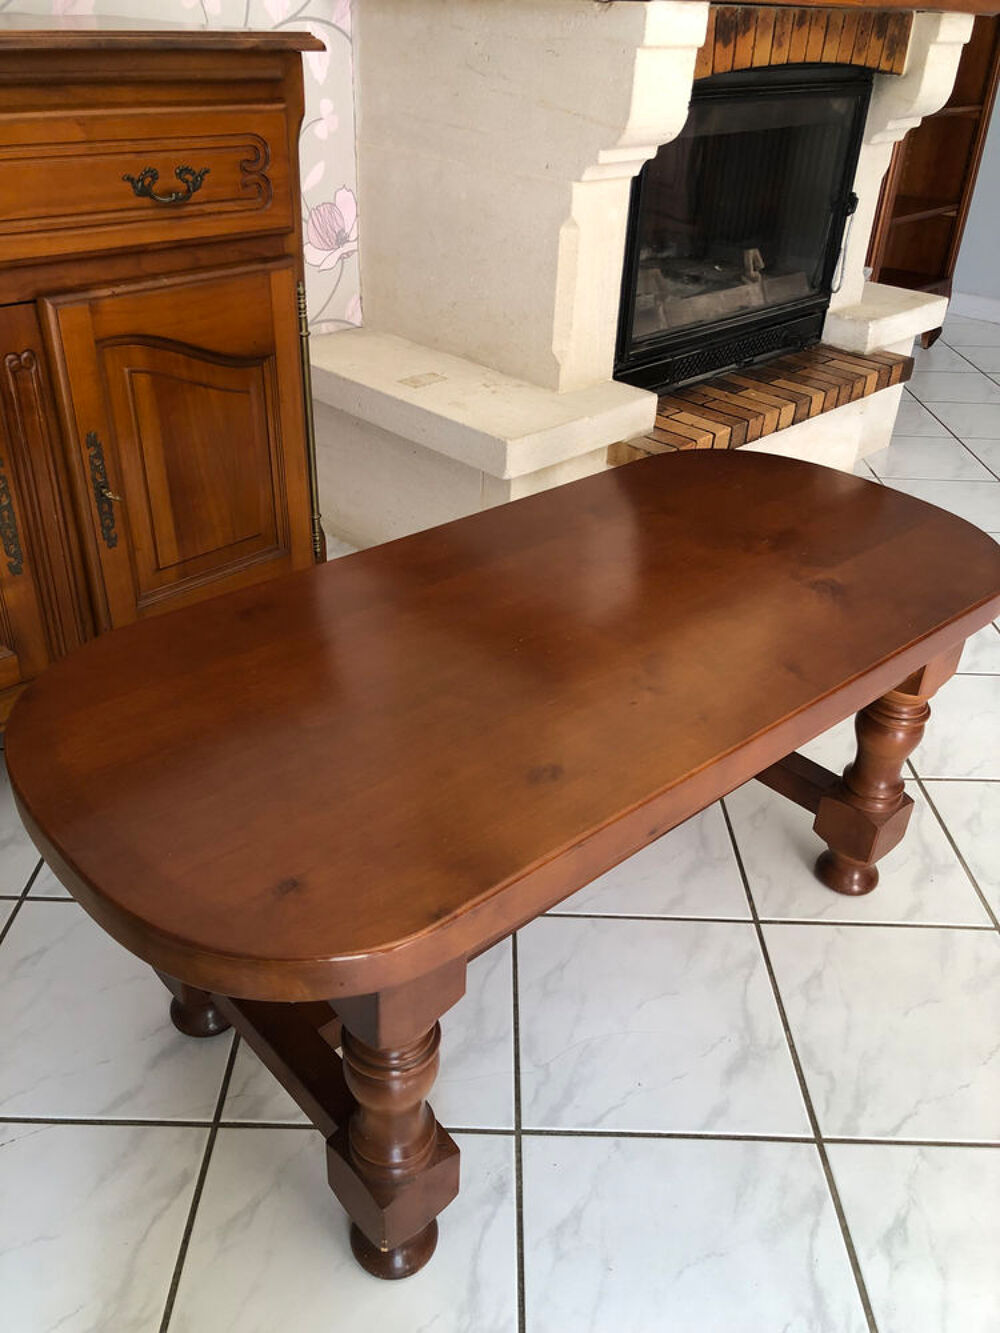 Belle table de salon - table basse en bois massif (merisier) Meubles